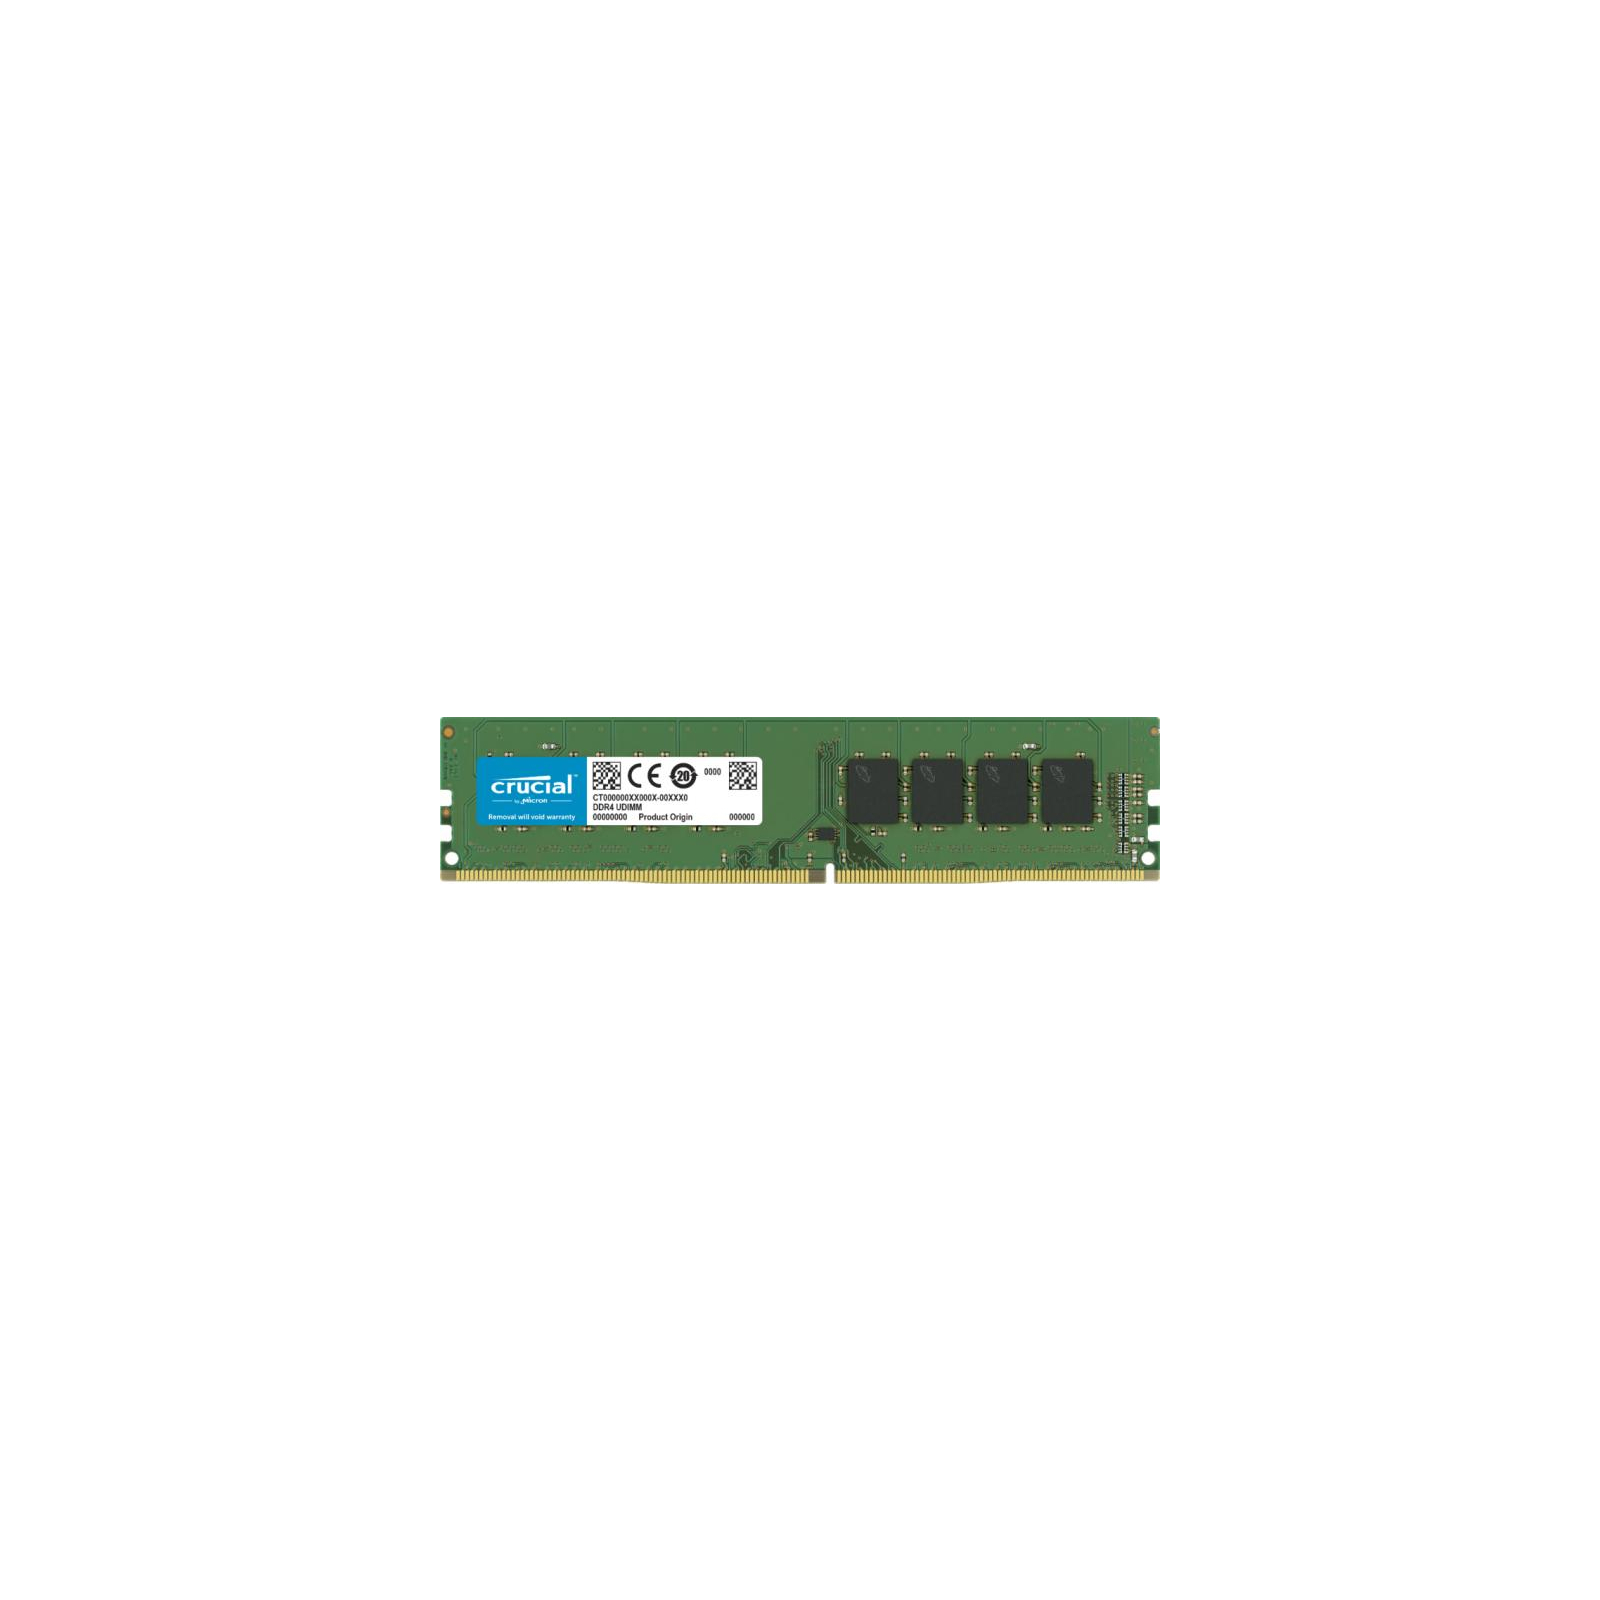 Модуль памяти для компьютера DDR4 8GB 2666 MHz Micron (CT8G4DFRA266)